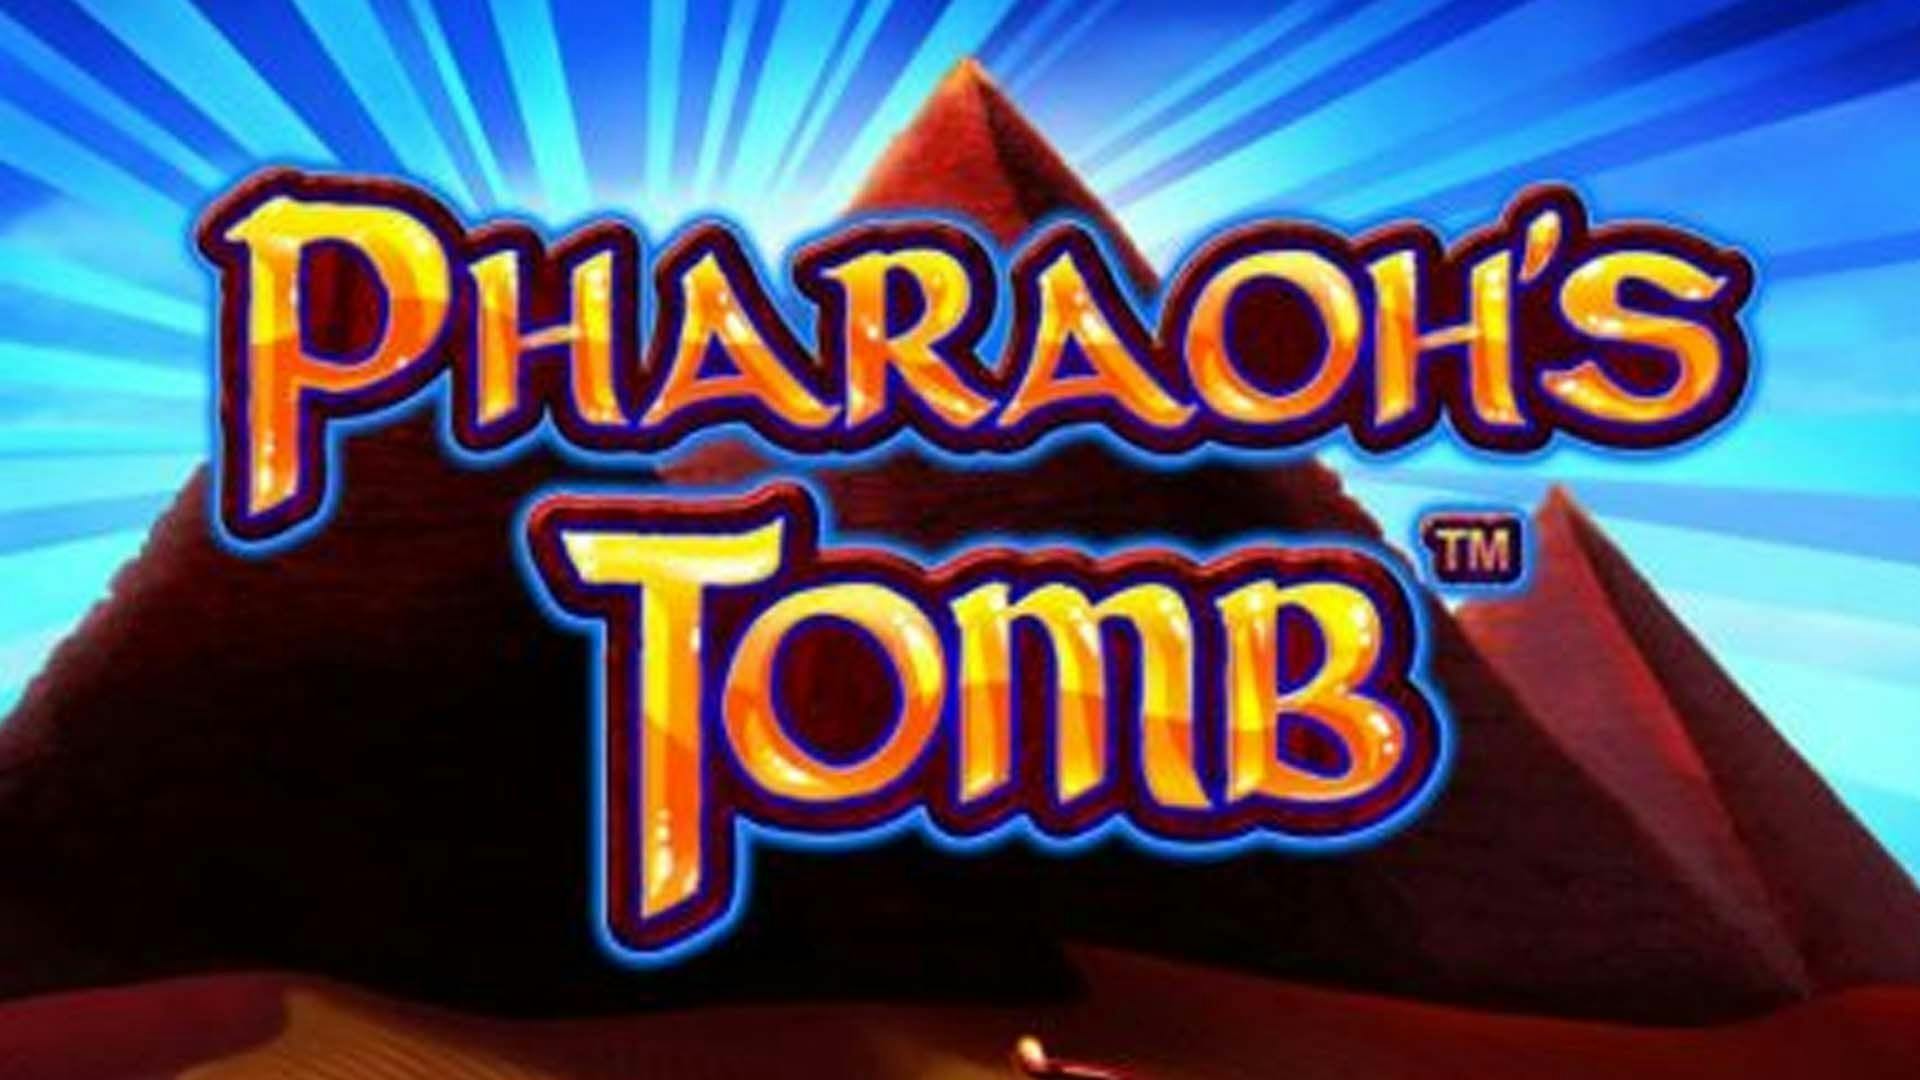 Pharaoh's Tomb Slot Online Free Play